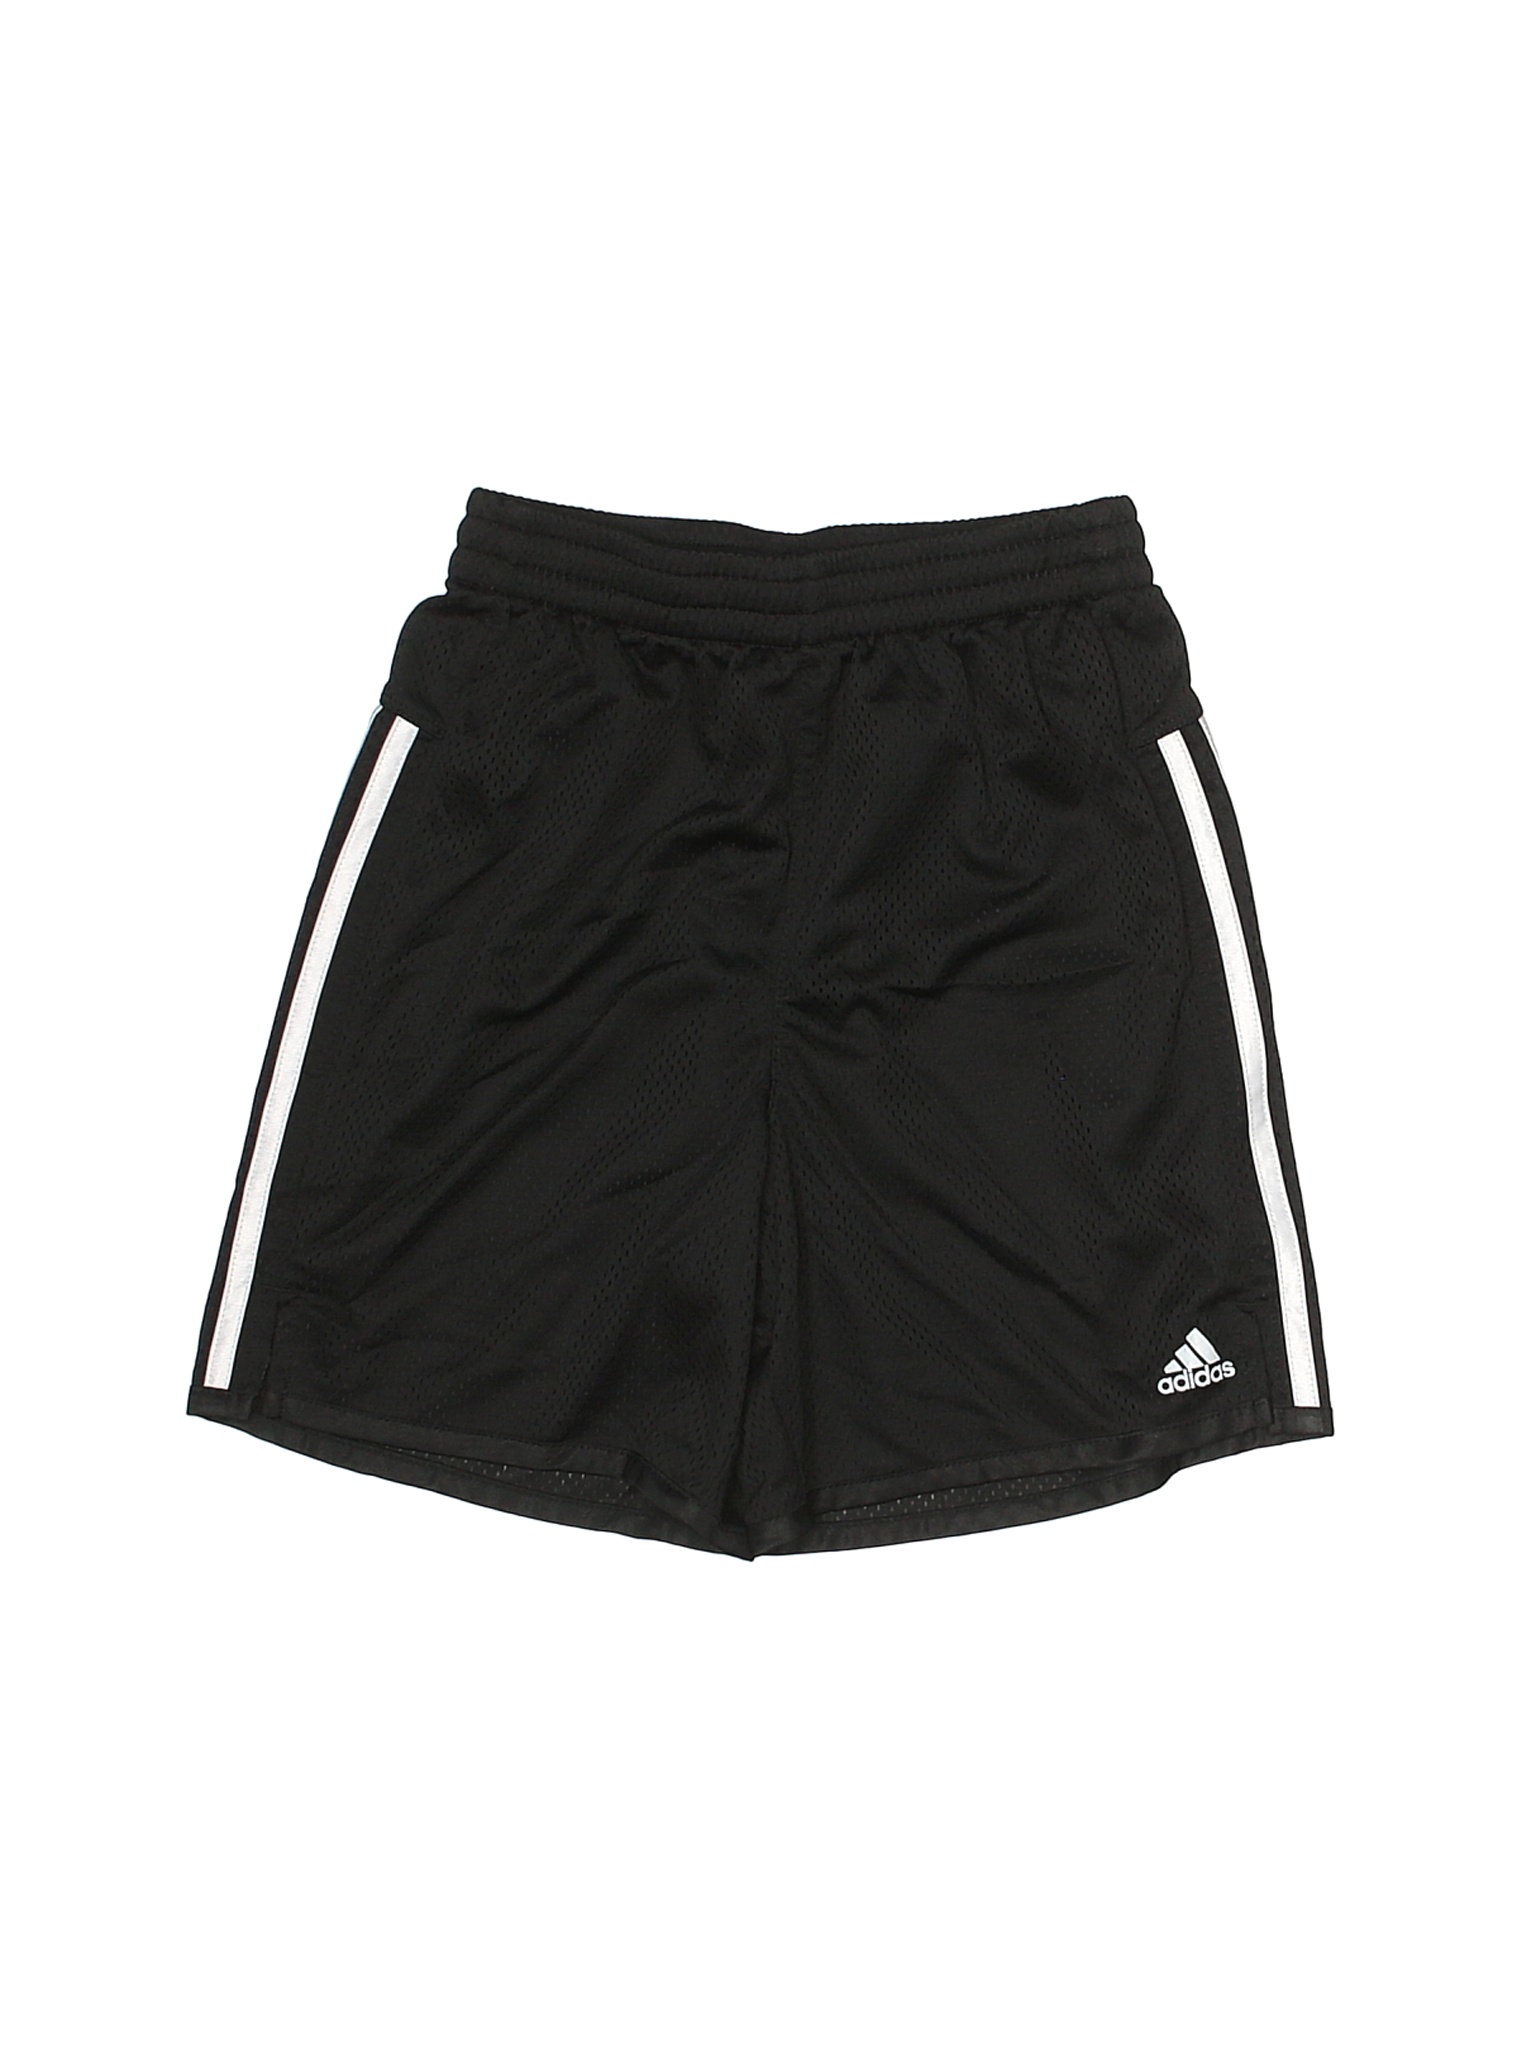 Adidas Girls Black Athletic Shorts 14 | eBay